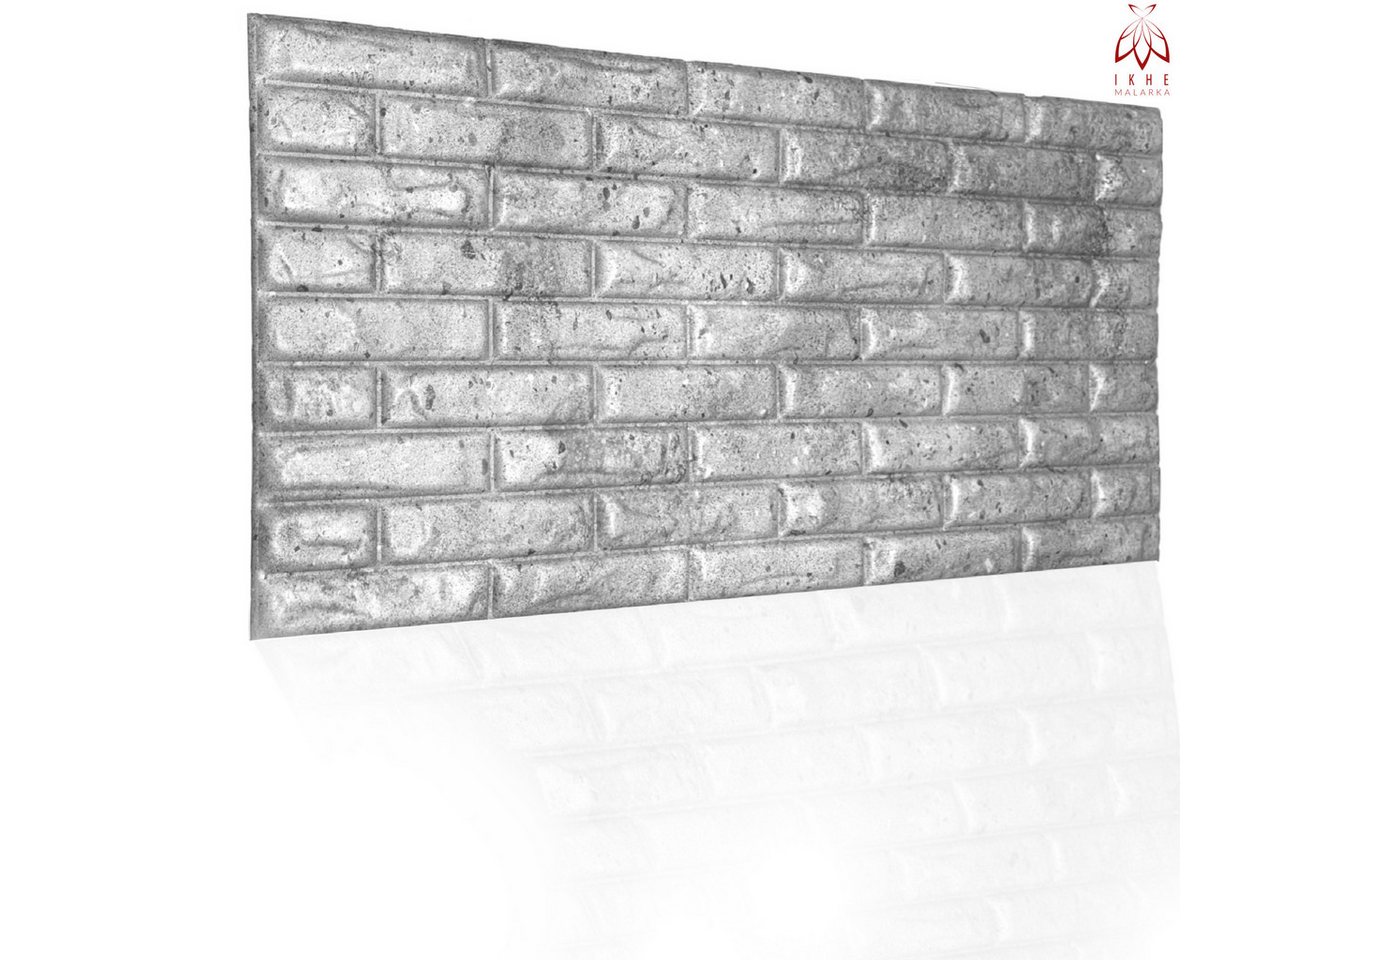 IKHEMalarka 3D Wandpaneel 4,10,16 Quadratmeter Polystyrol Deckenpaneele XL Brick, BxL: 50,00x100,00 cm, 0,50 qm, (32-tlg) Ziegeloptik Steinoptik Backstein Wandpaneele von IKHEMalarka